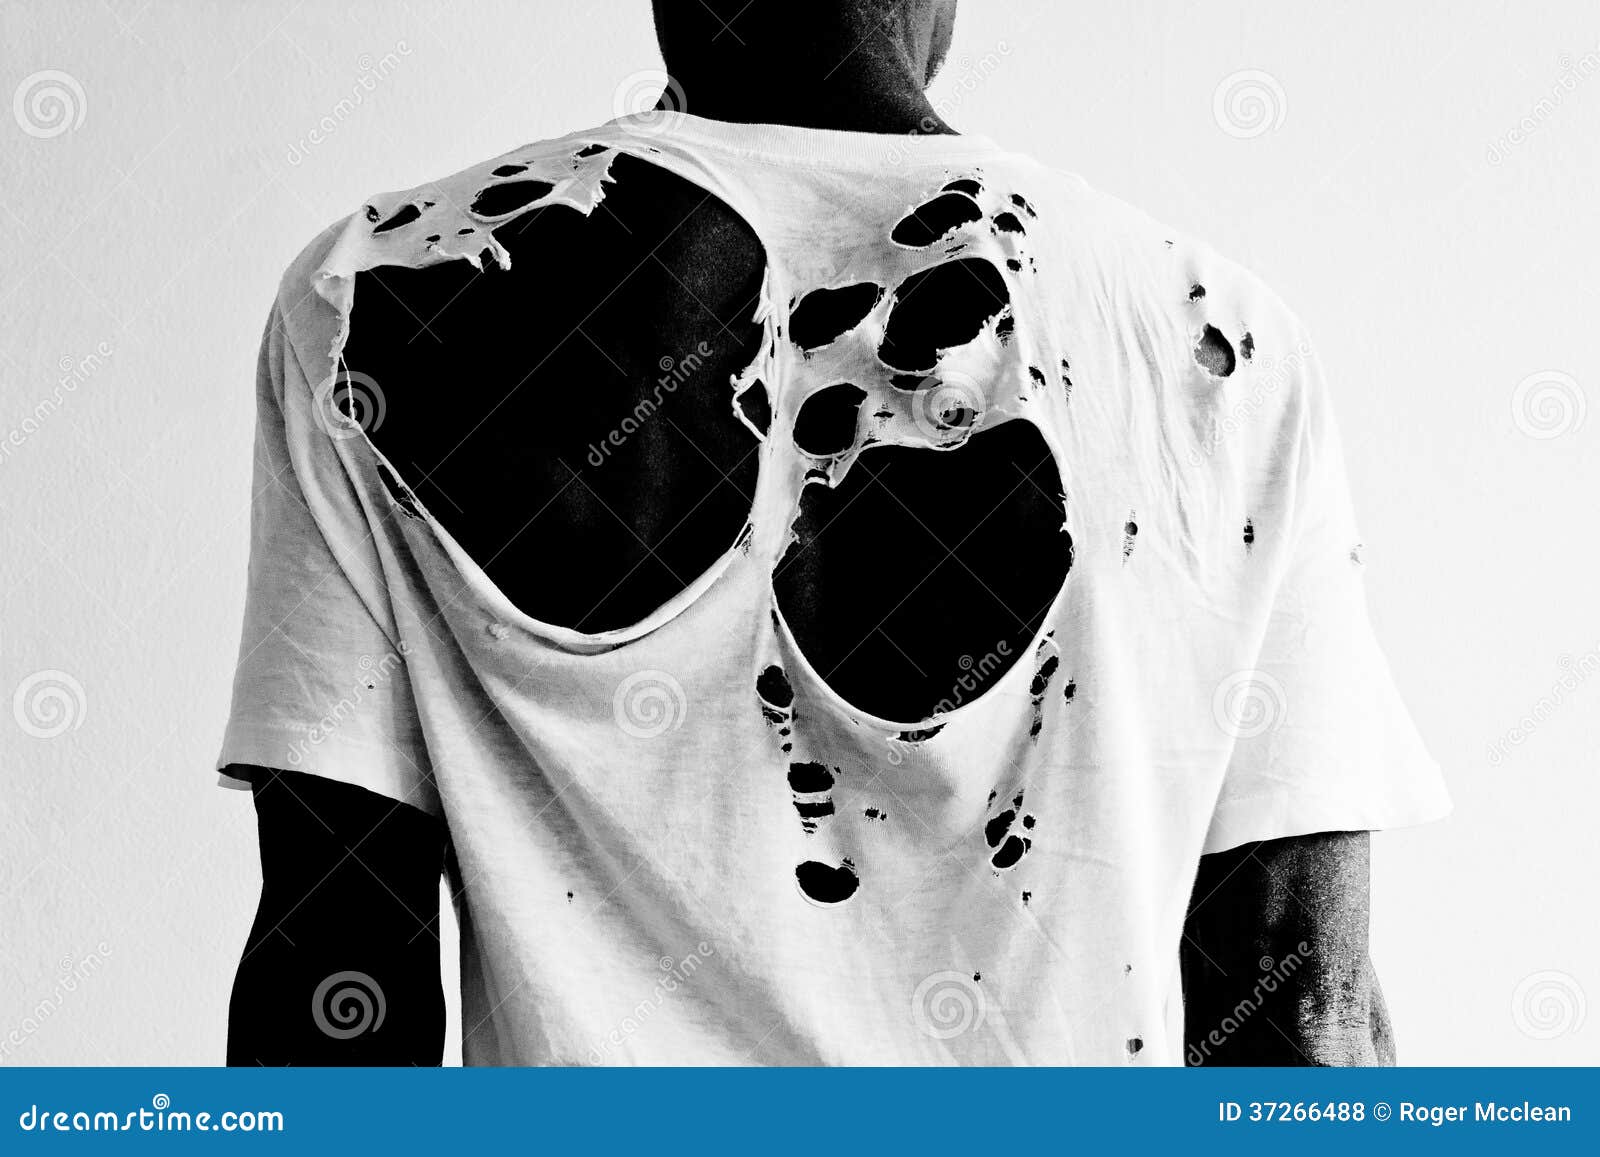 black-man-wearing-torn-white-t-shirt-back-ripped-holy-37266488.jpg